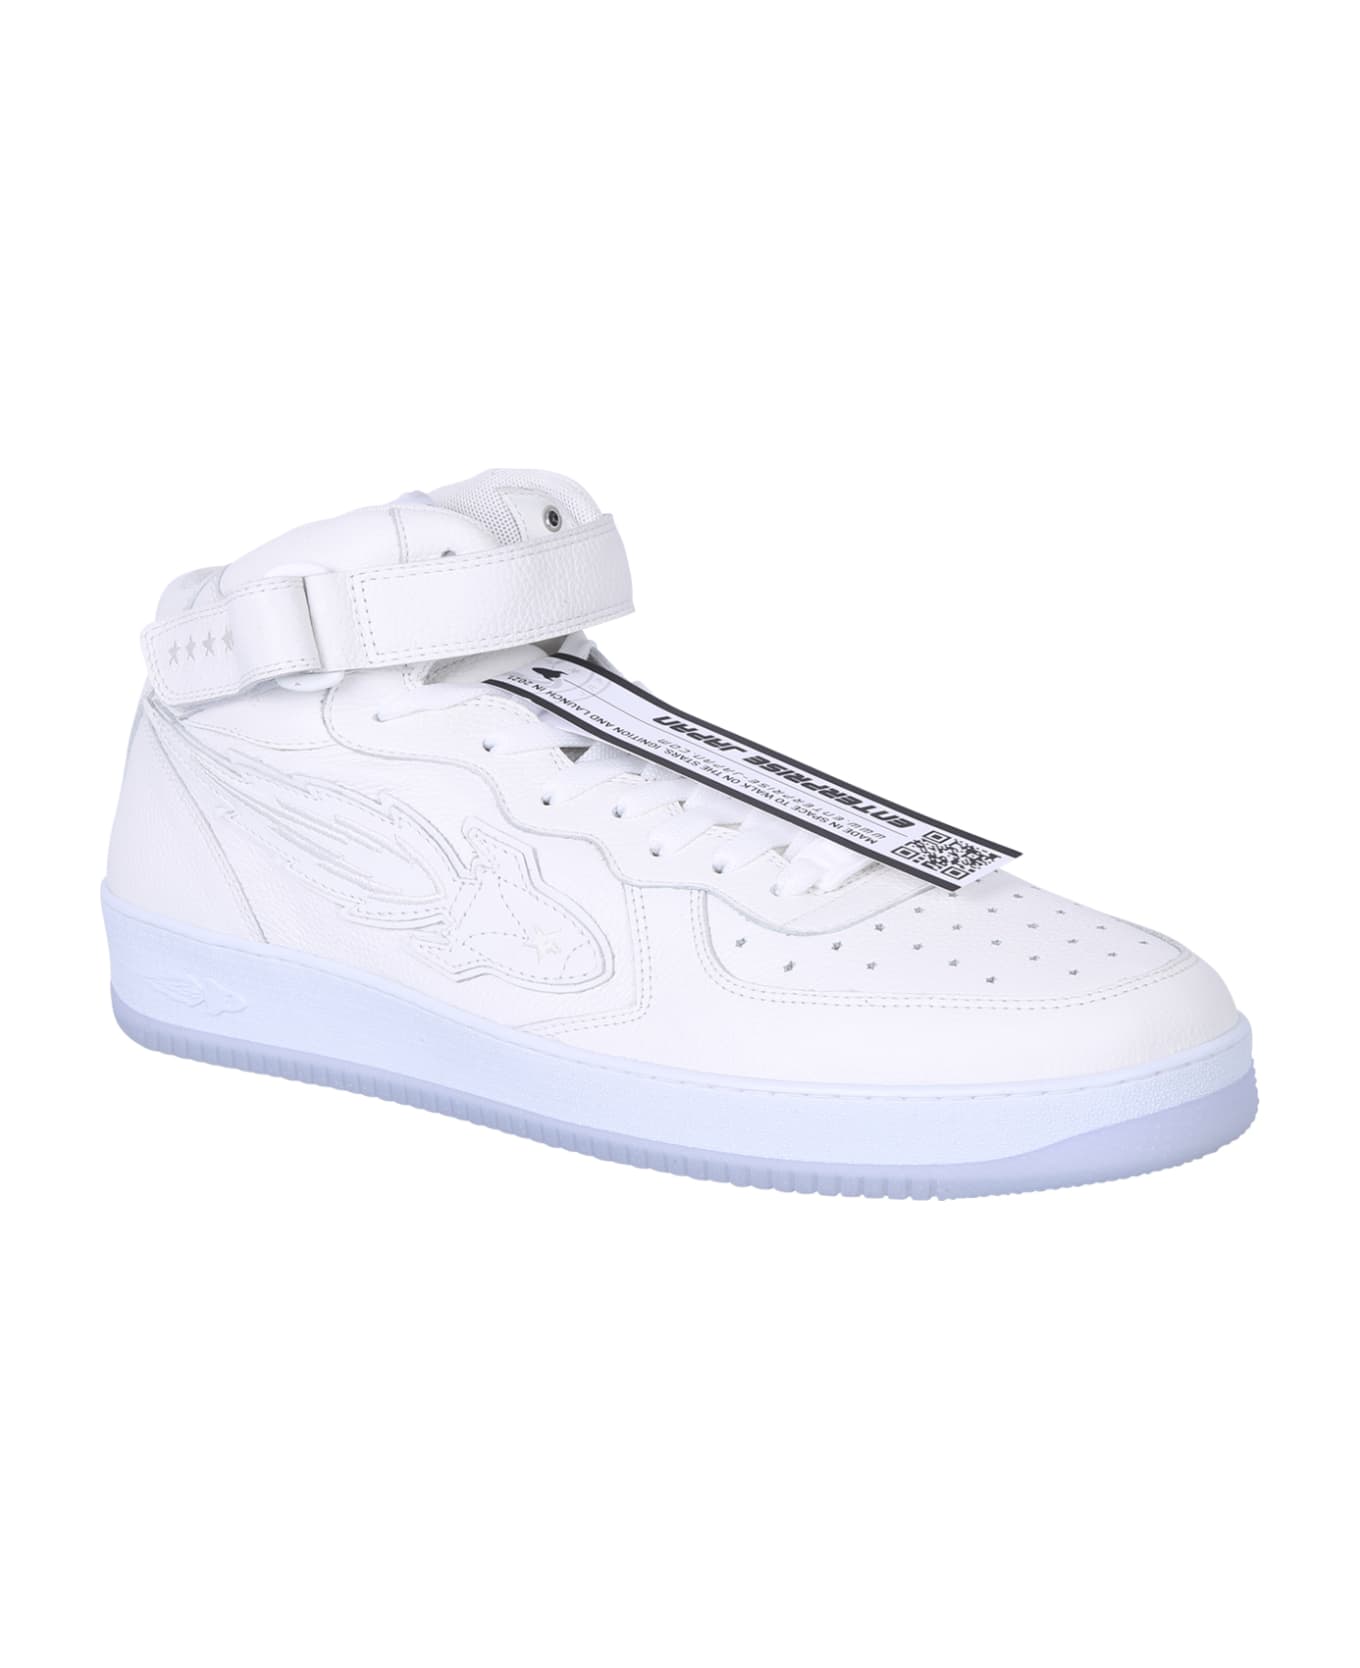 Enterprise Japan Lace Up Sneakers - White